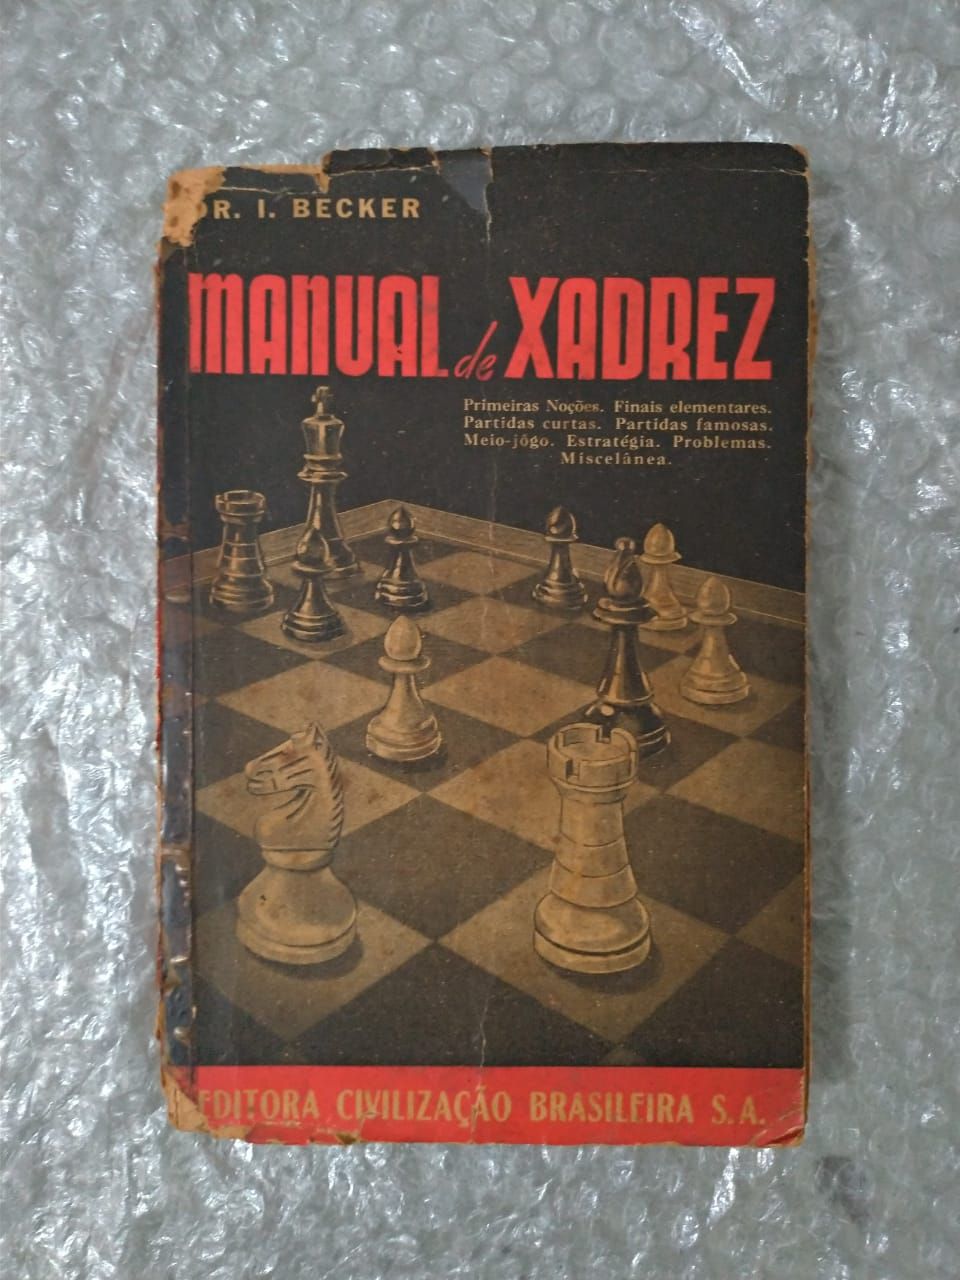 Livro: Xadrez para Principiantes - J. Doubek